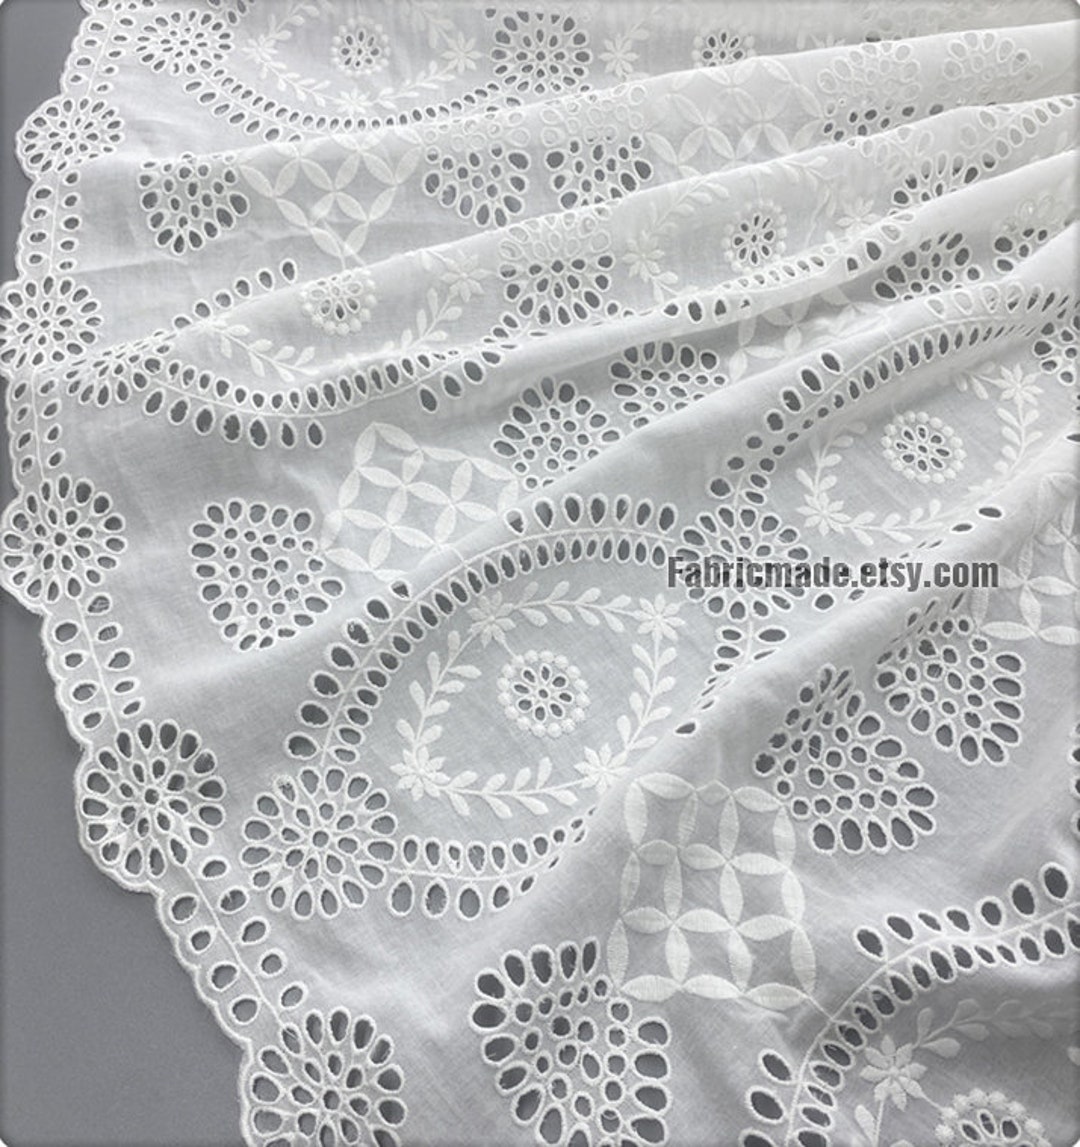 Eyelet Embroidered White Cotton Fabric Trim circa 1900